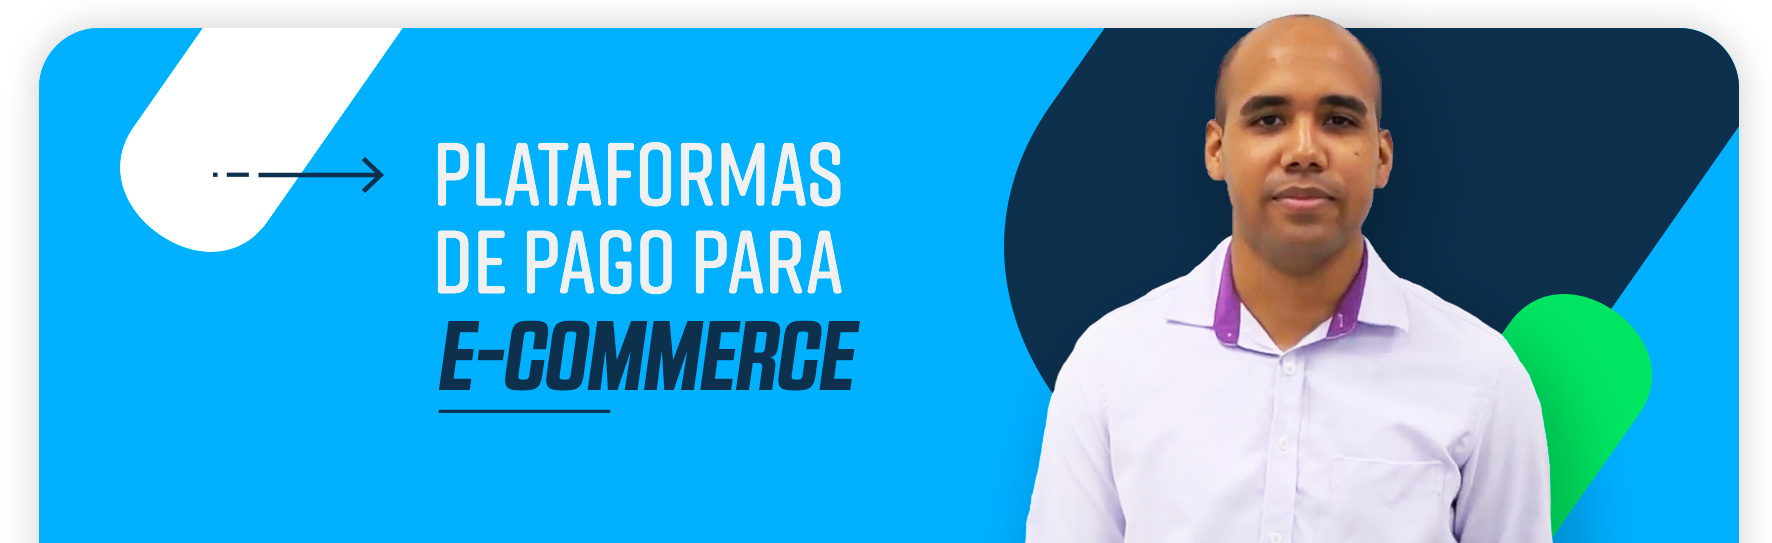 Plataformas de pago para E-commerce con Abel Pomares - Blog | NextU LATAM